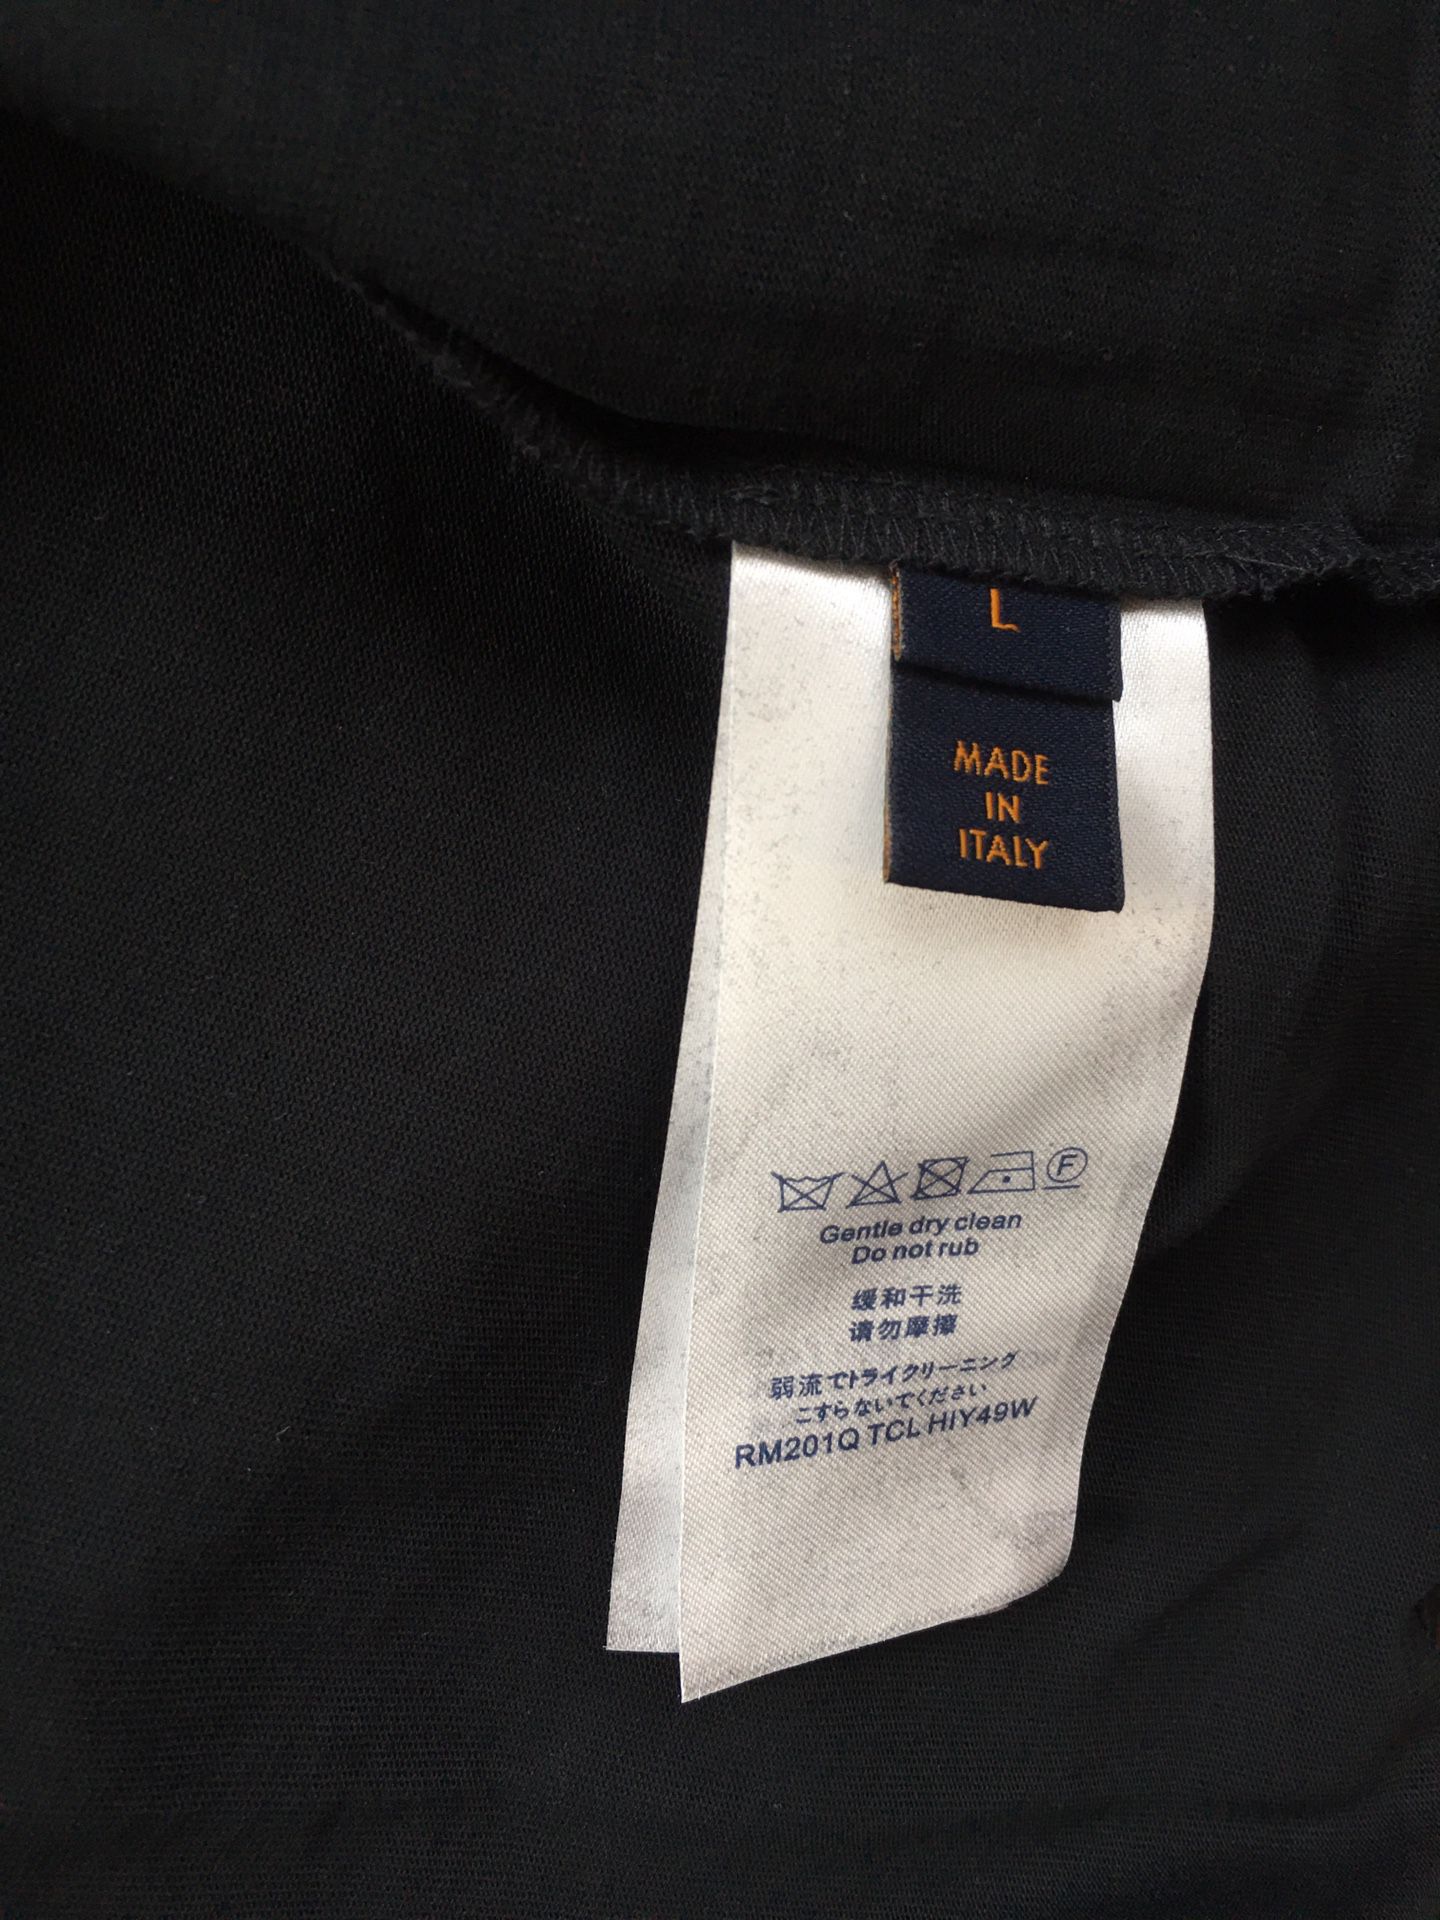 Louis Vuitton LVSE Monogram Gradient T-Shirt | Noir Blanc for Sale in  Alexandria, VA - OfferUp